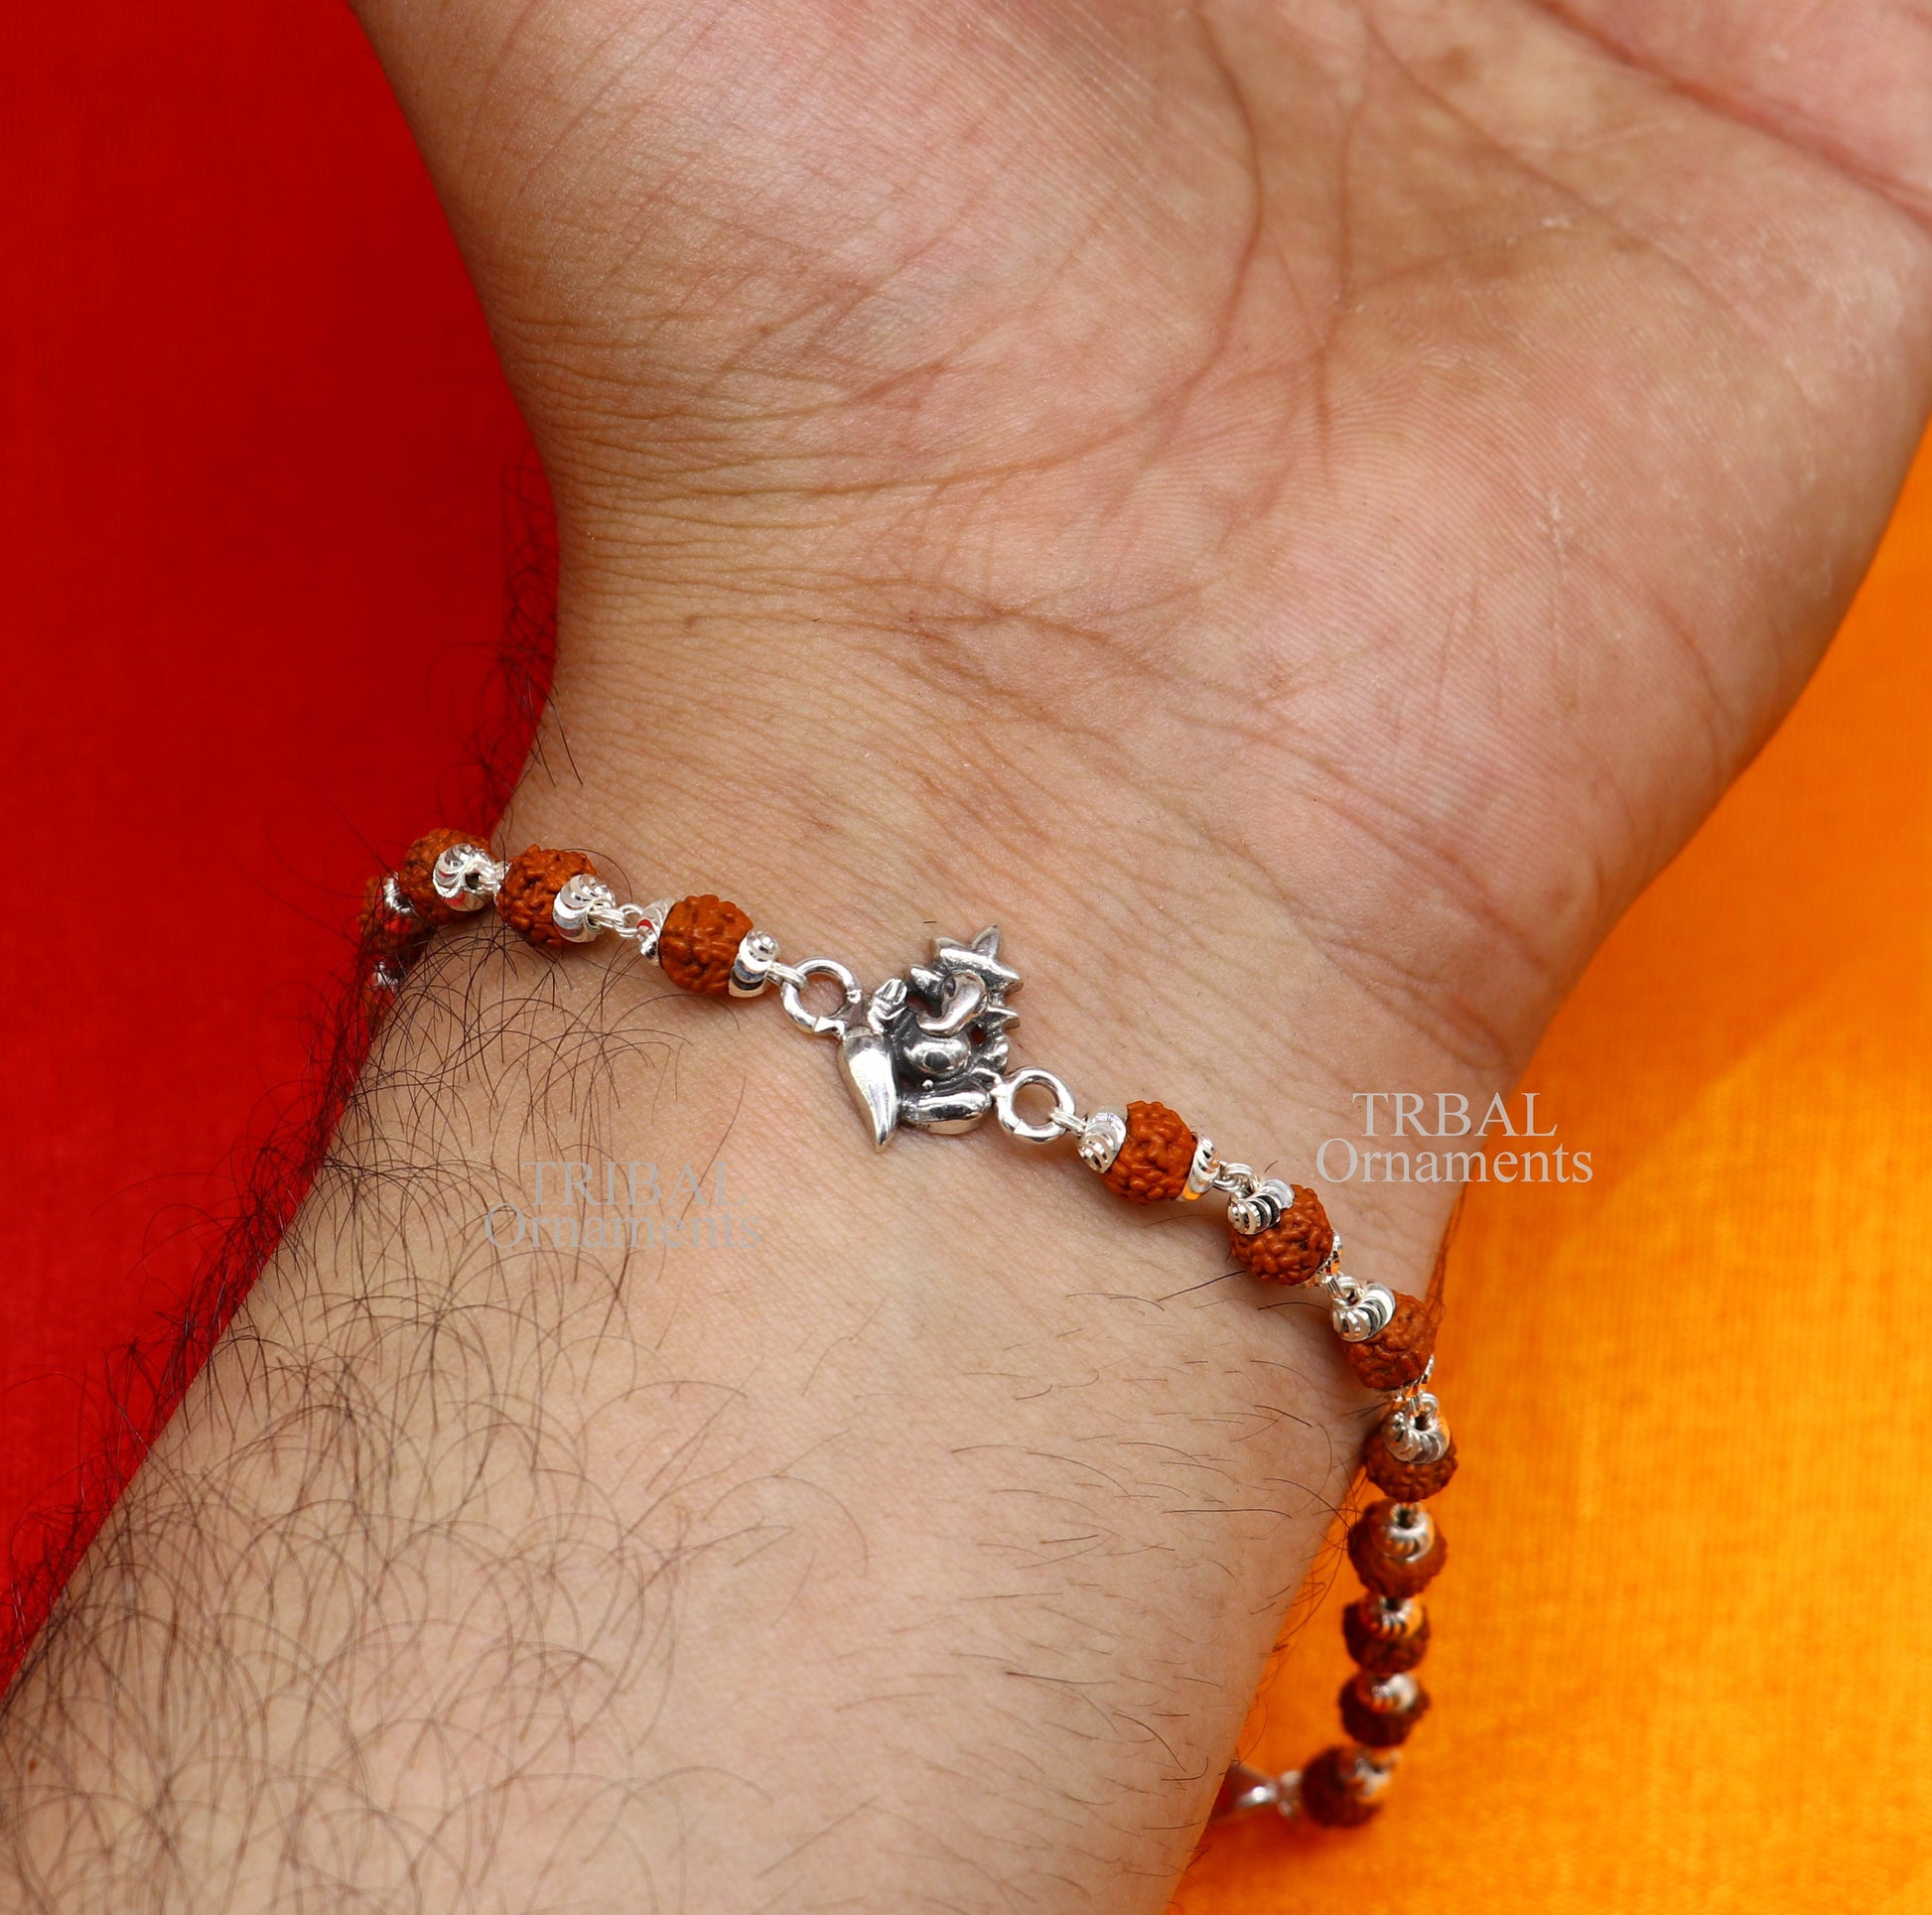 925 sterling silver handmade lord Ganesha design Rakhi bracelet amazing Rudraksha or Tulsi beaded bracelet, use as daily use jewelry rk191 - TRIBAL ORNAMENTS